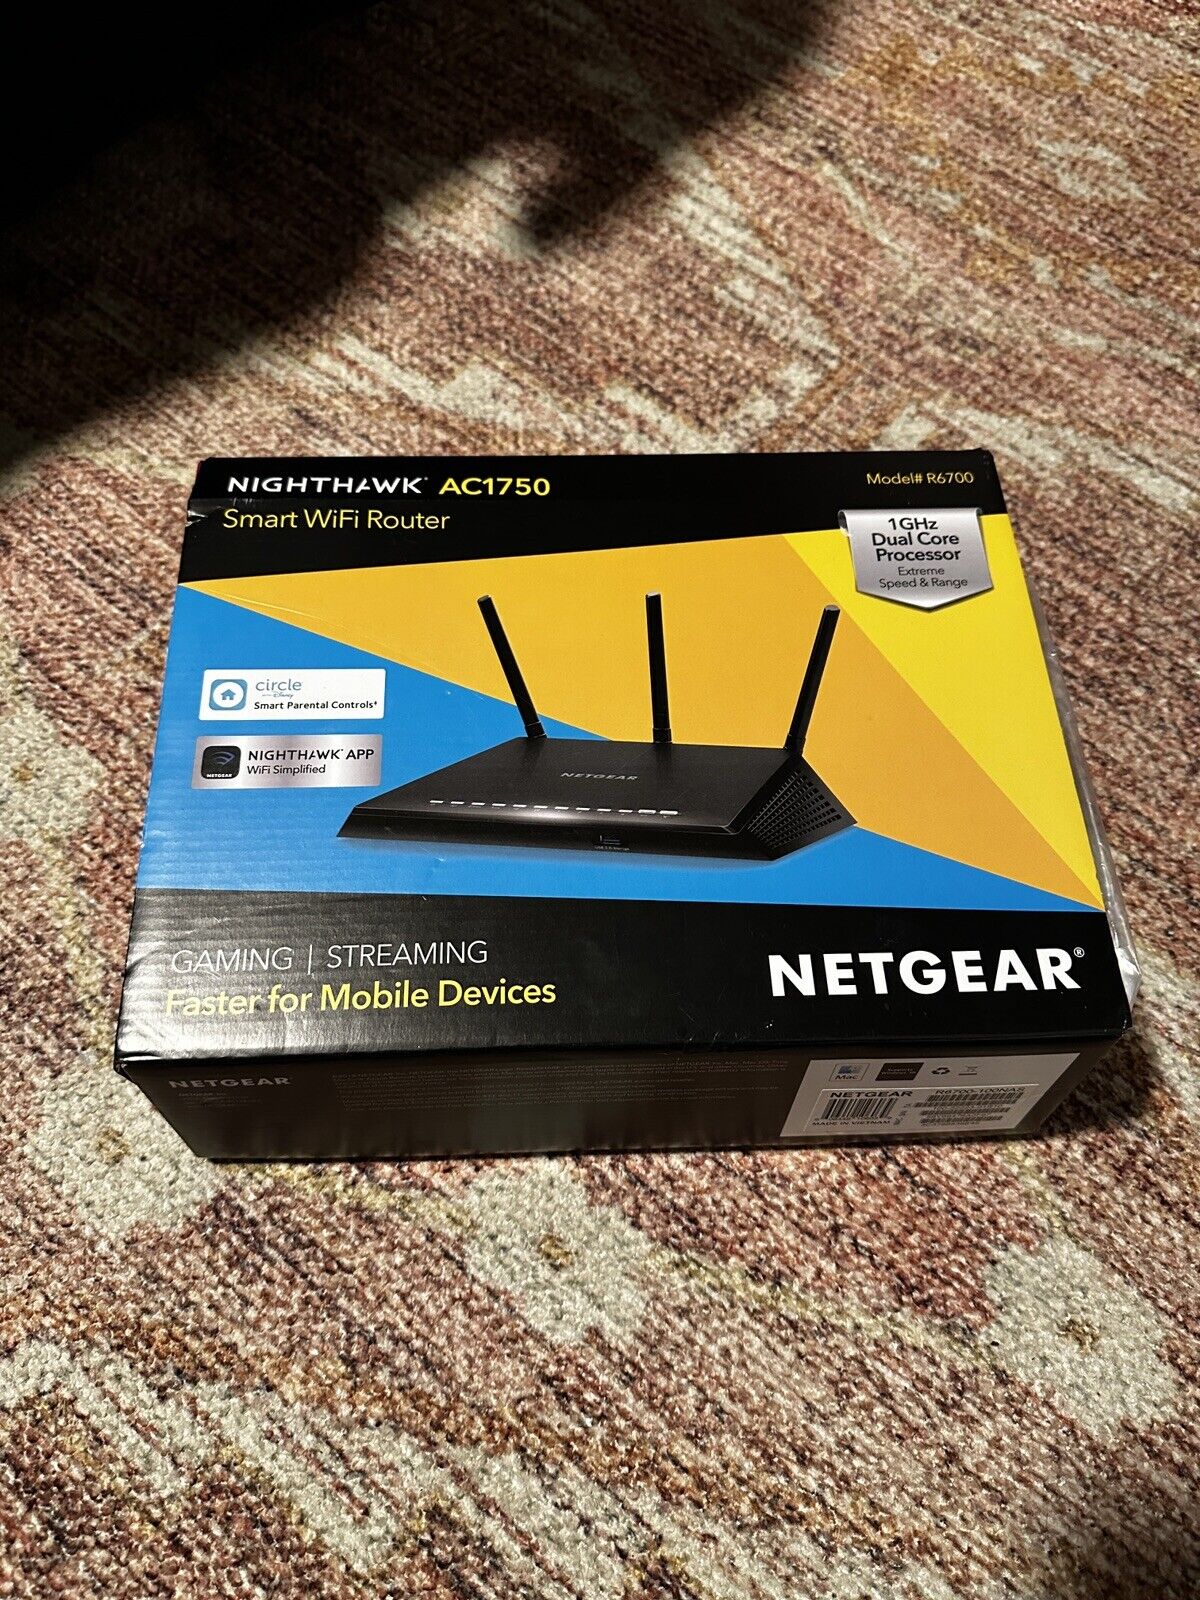 Netgear Nighthawk Ac1750 R6700-100nas Smart Wifi Router Open Box